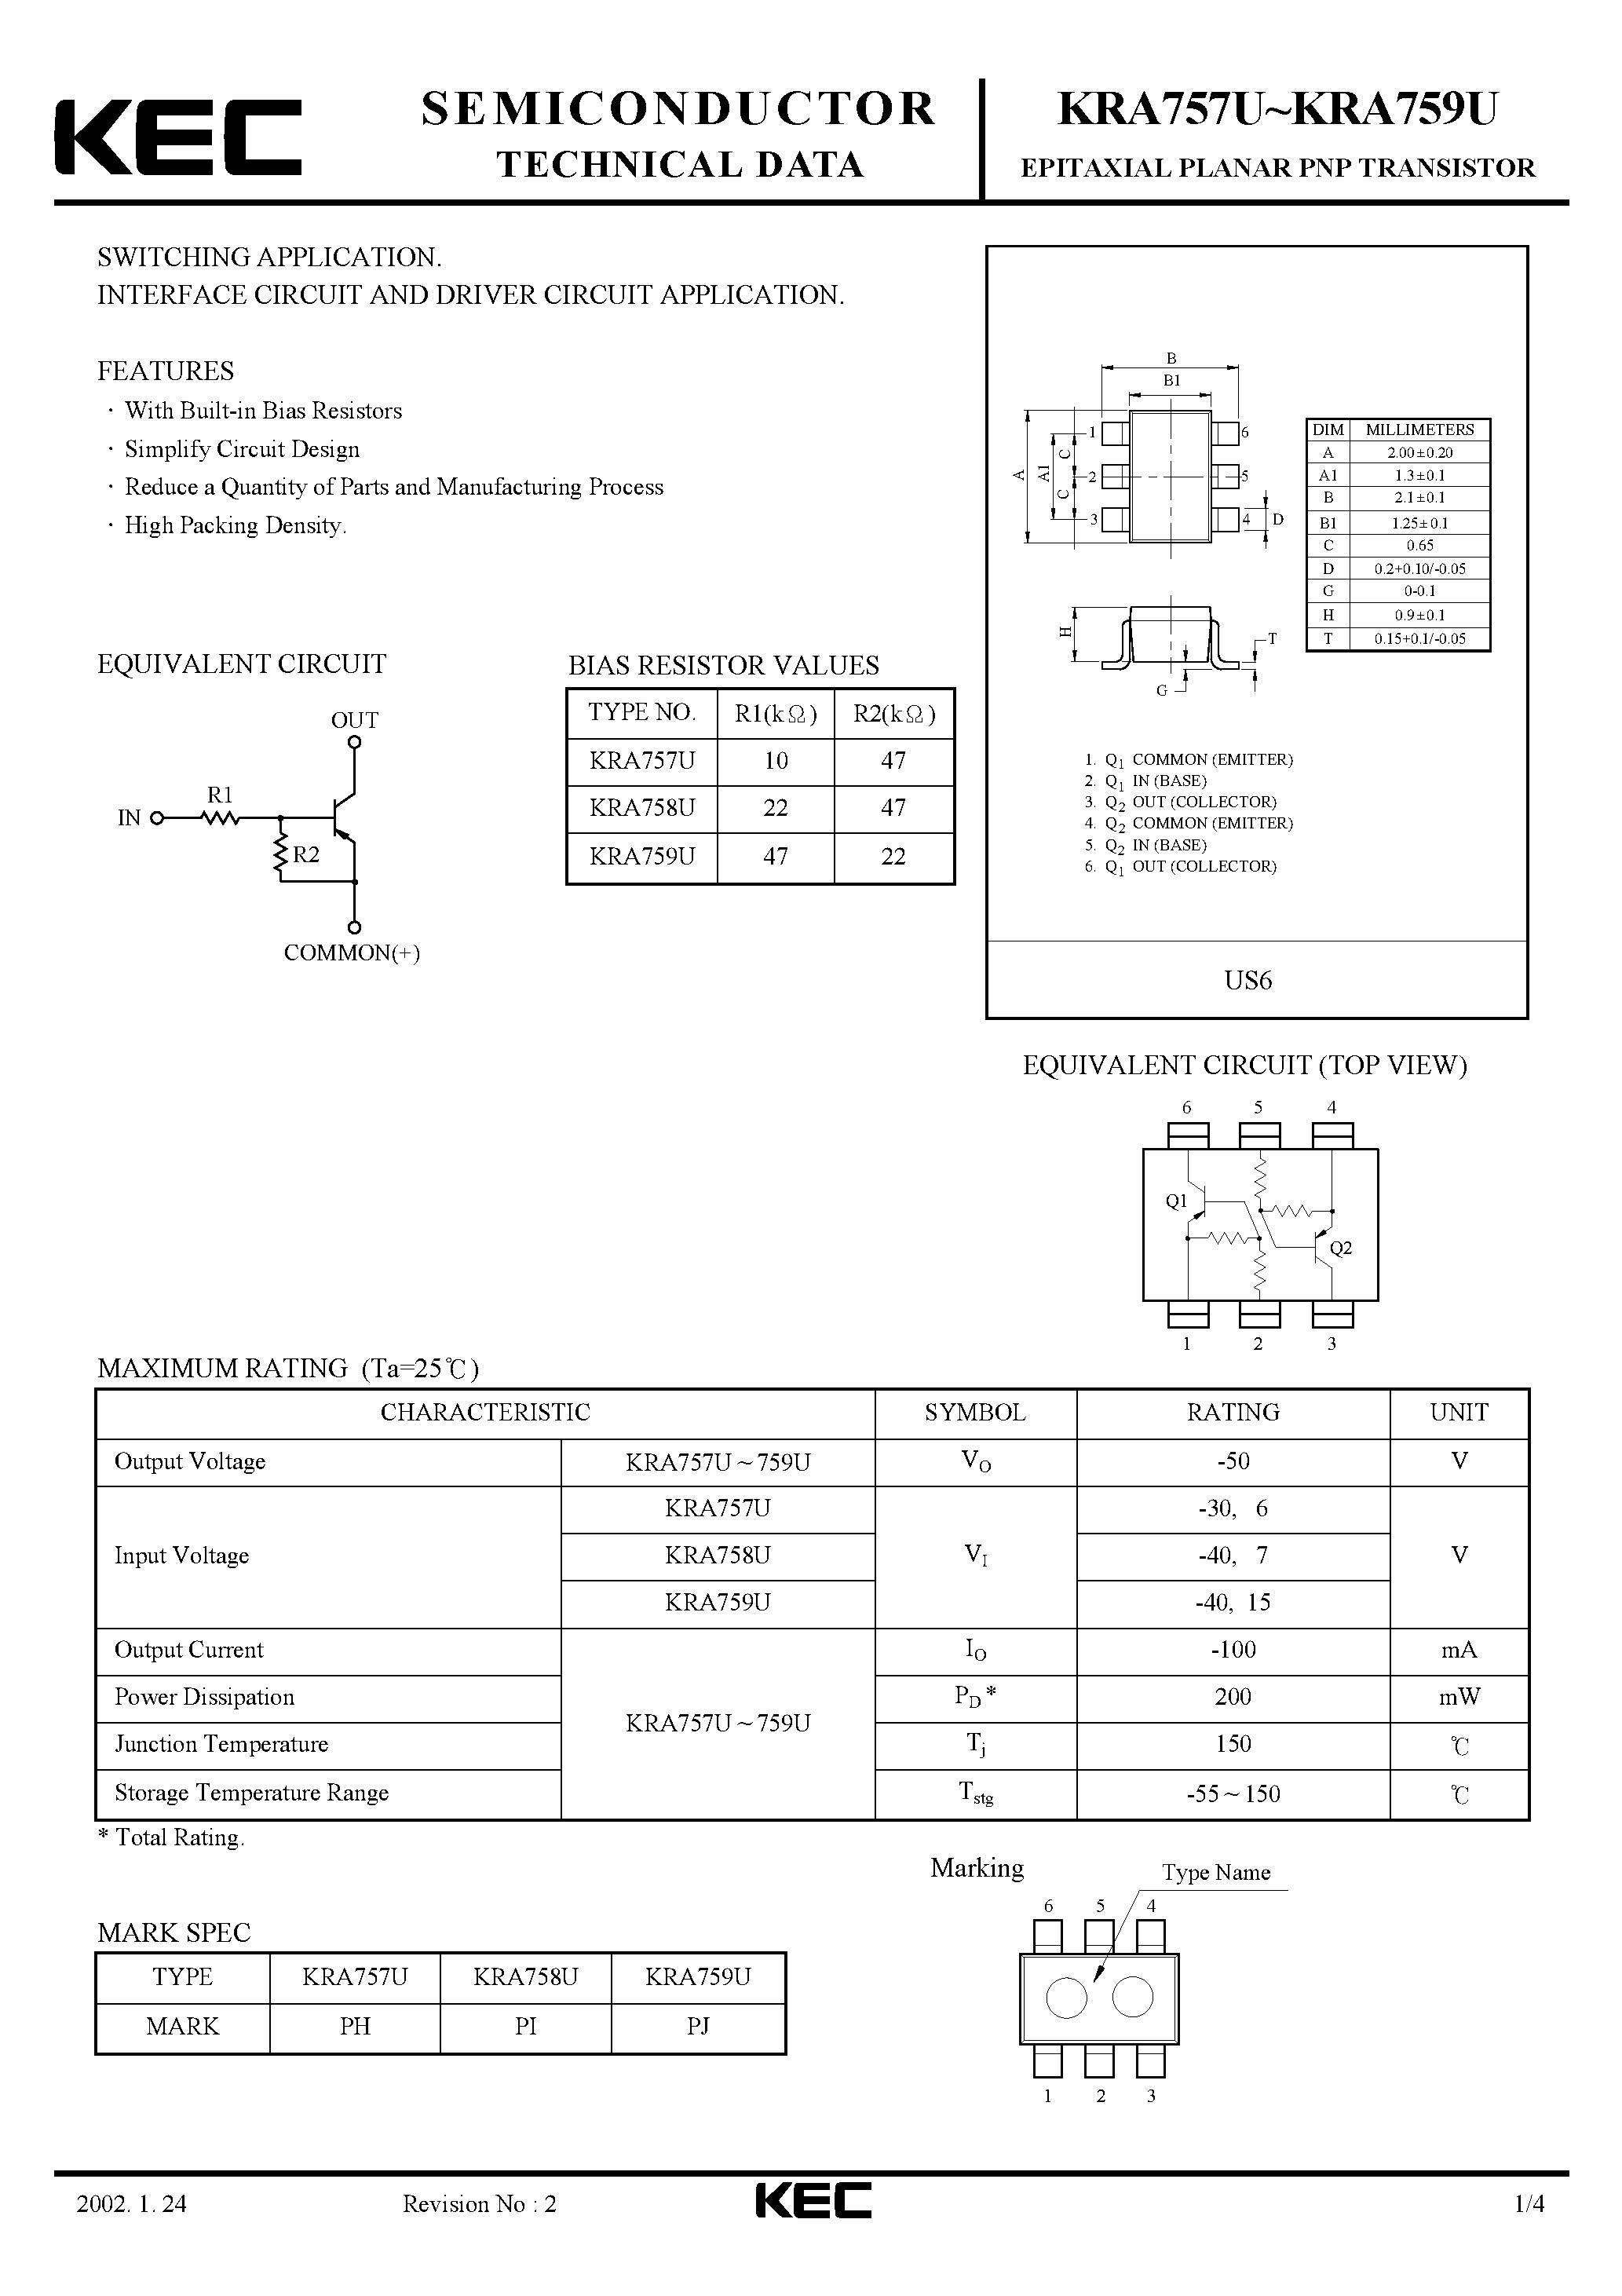 Datasheet KRA757U - (KRA757U - KRA759U) EPITAXIAL PLANAR PNP TRANSISTOR page 1